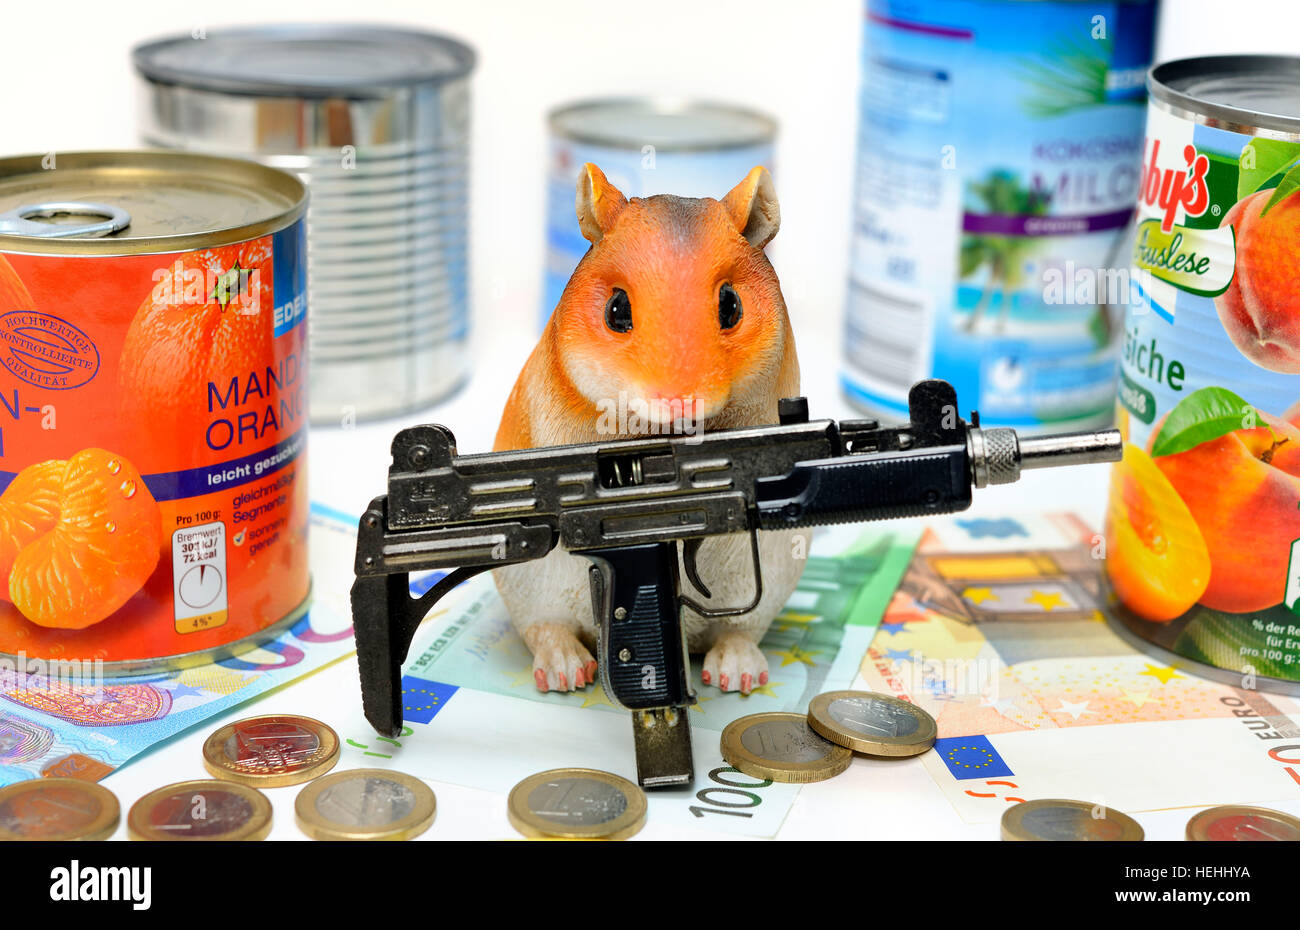 Hamsterfigur mit Konservendosen und Maschinengewehr, Symbolfoto Hamsterkaeufe Stock Photo